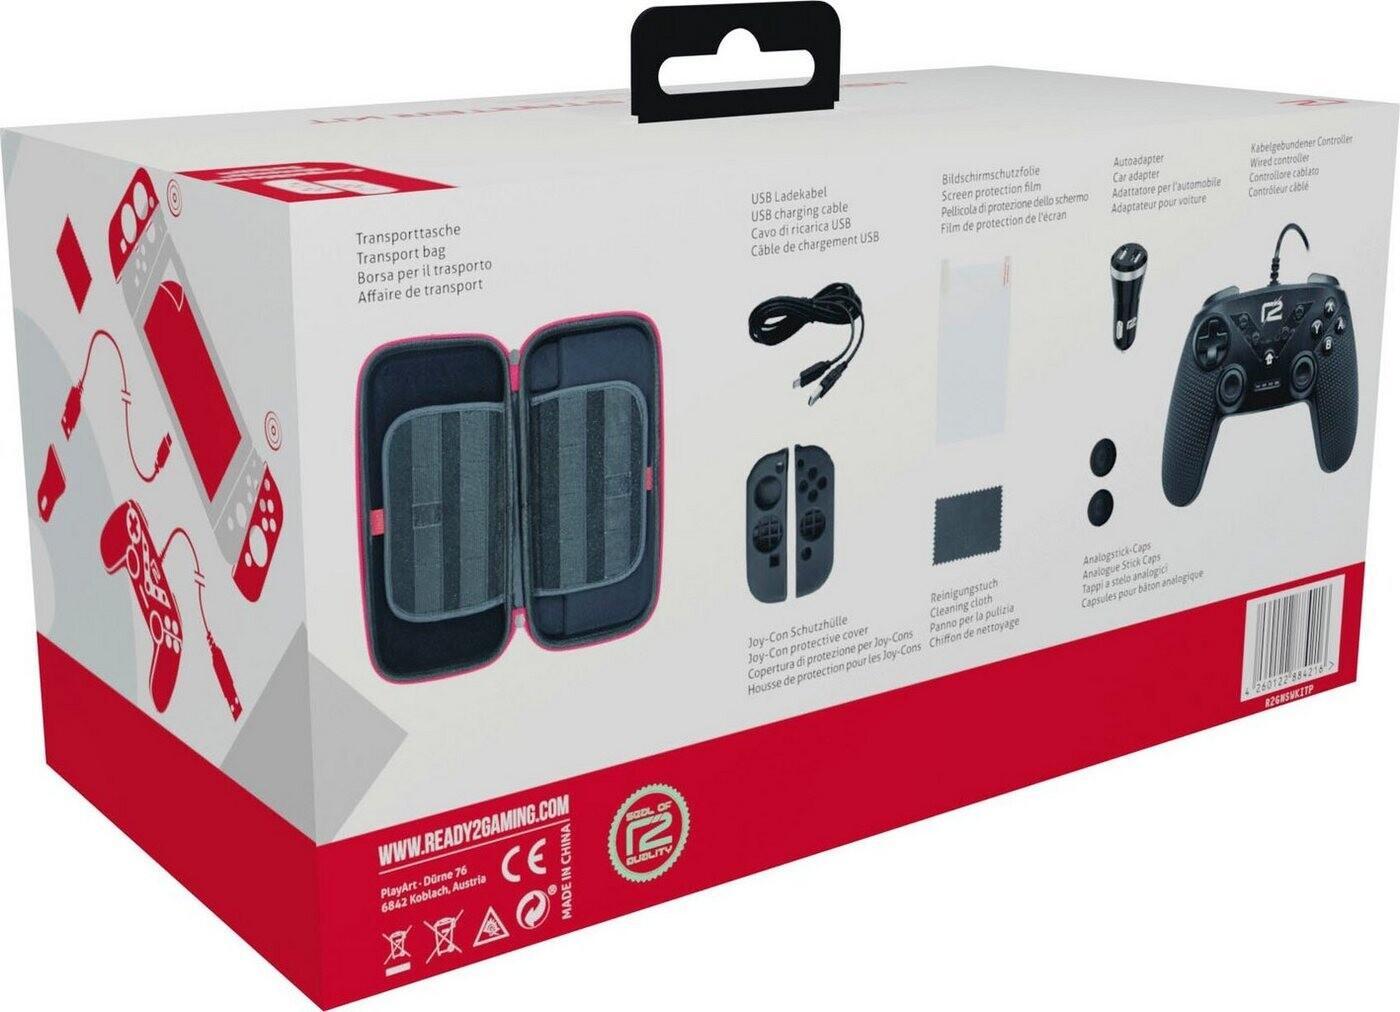 ab Kit 12,99 bei Switch Starter ready2gaming Premium € Preisvergleich Nintendo |